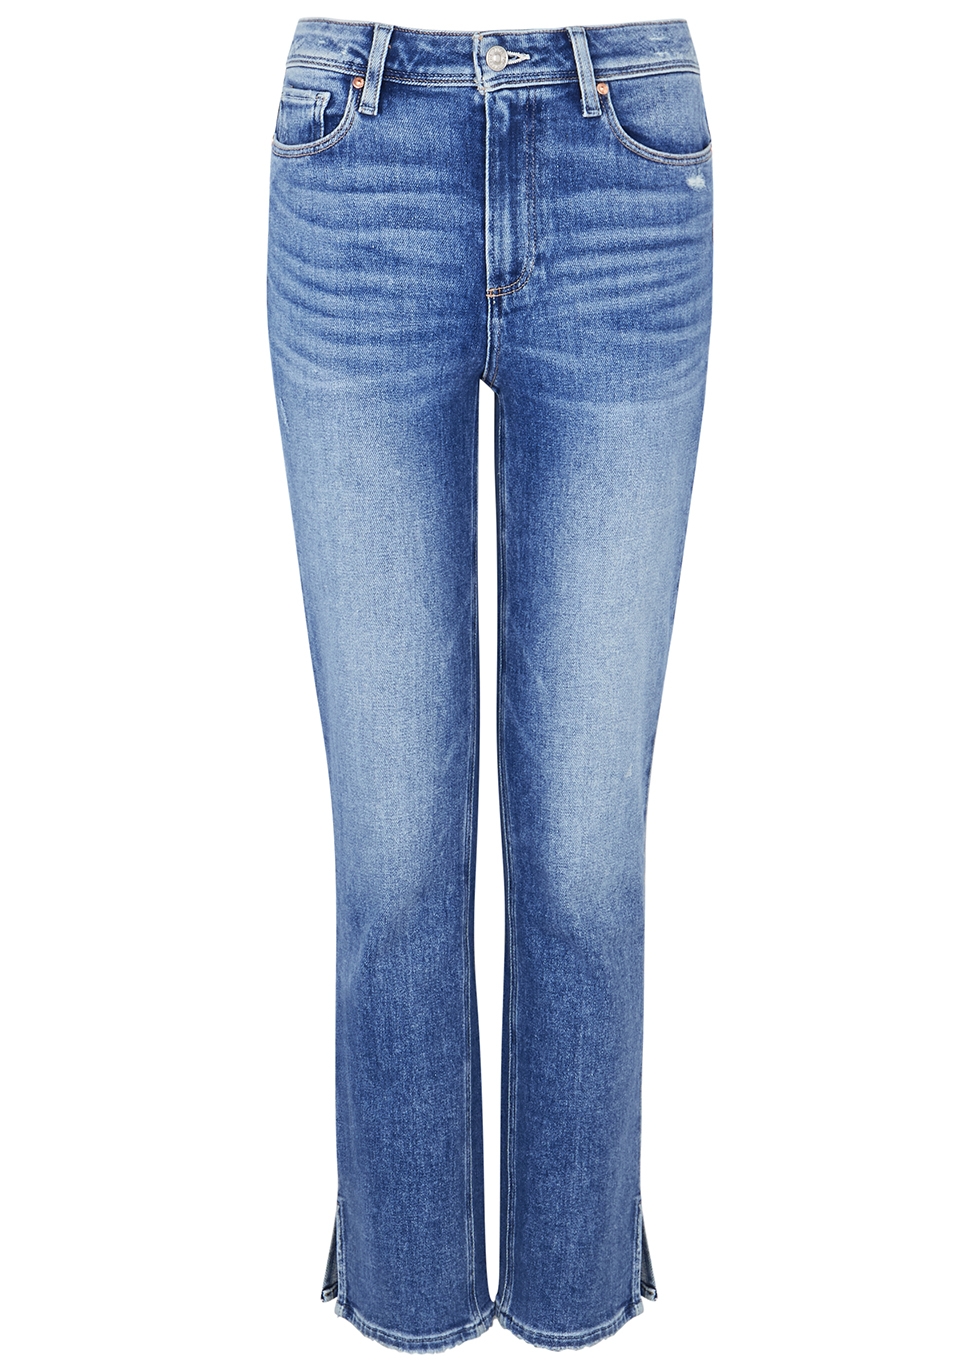 Brigitte Transcend blue slim boyfriend jeans